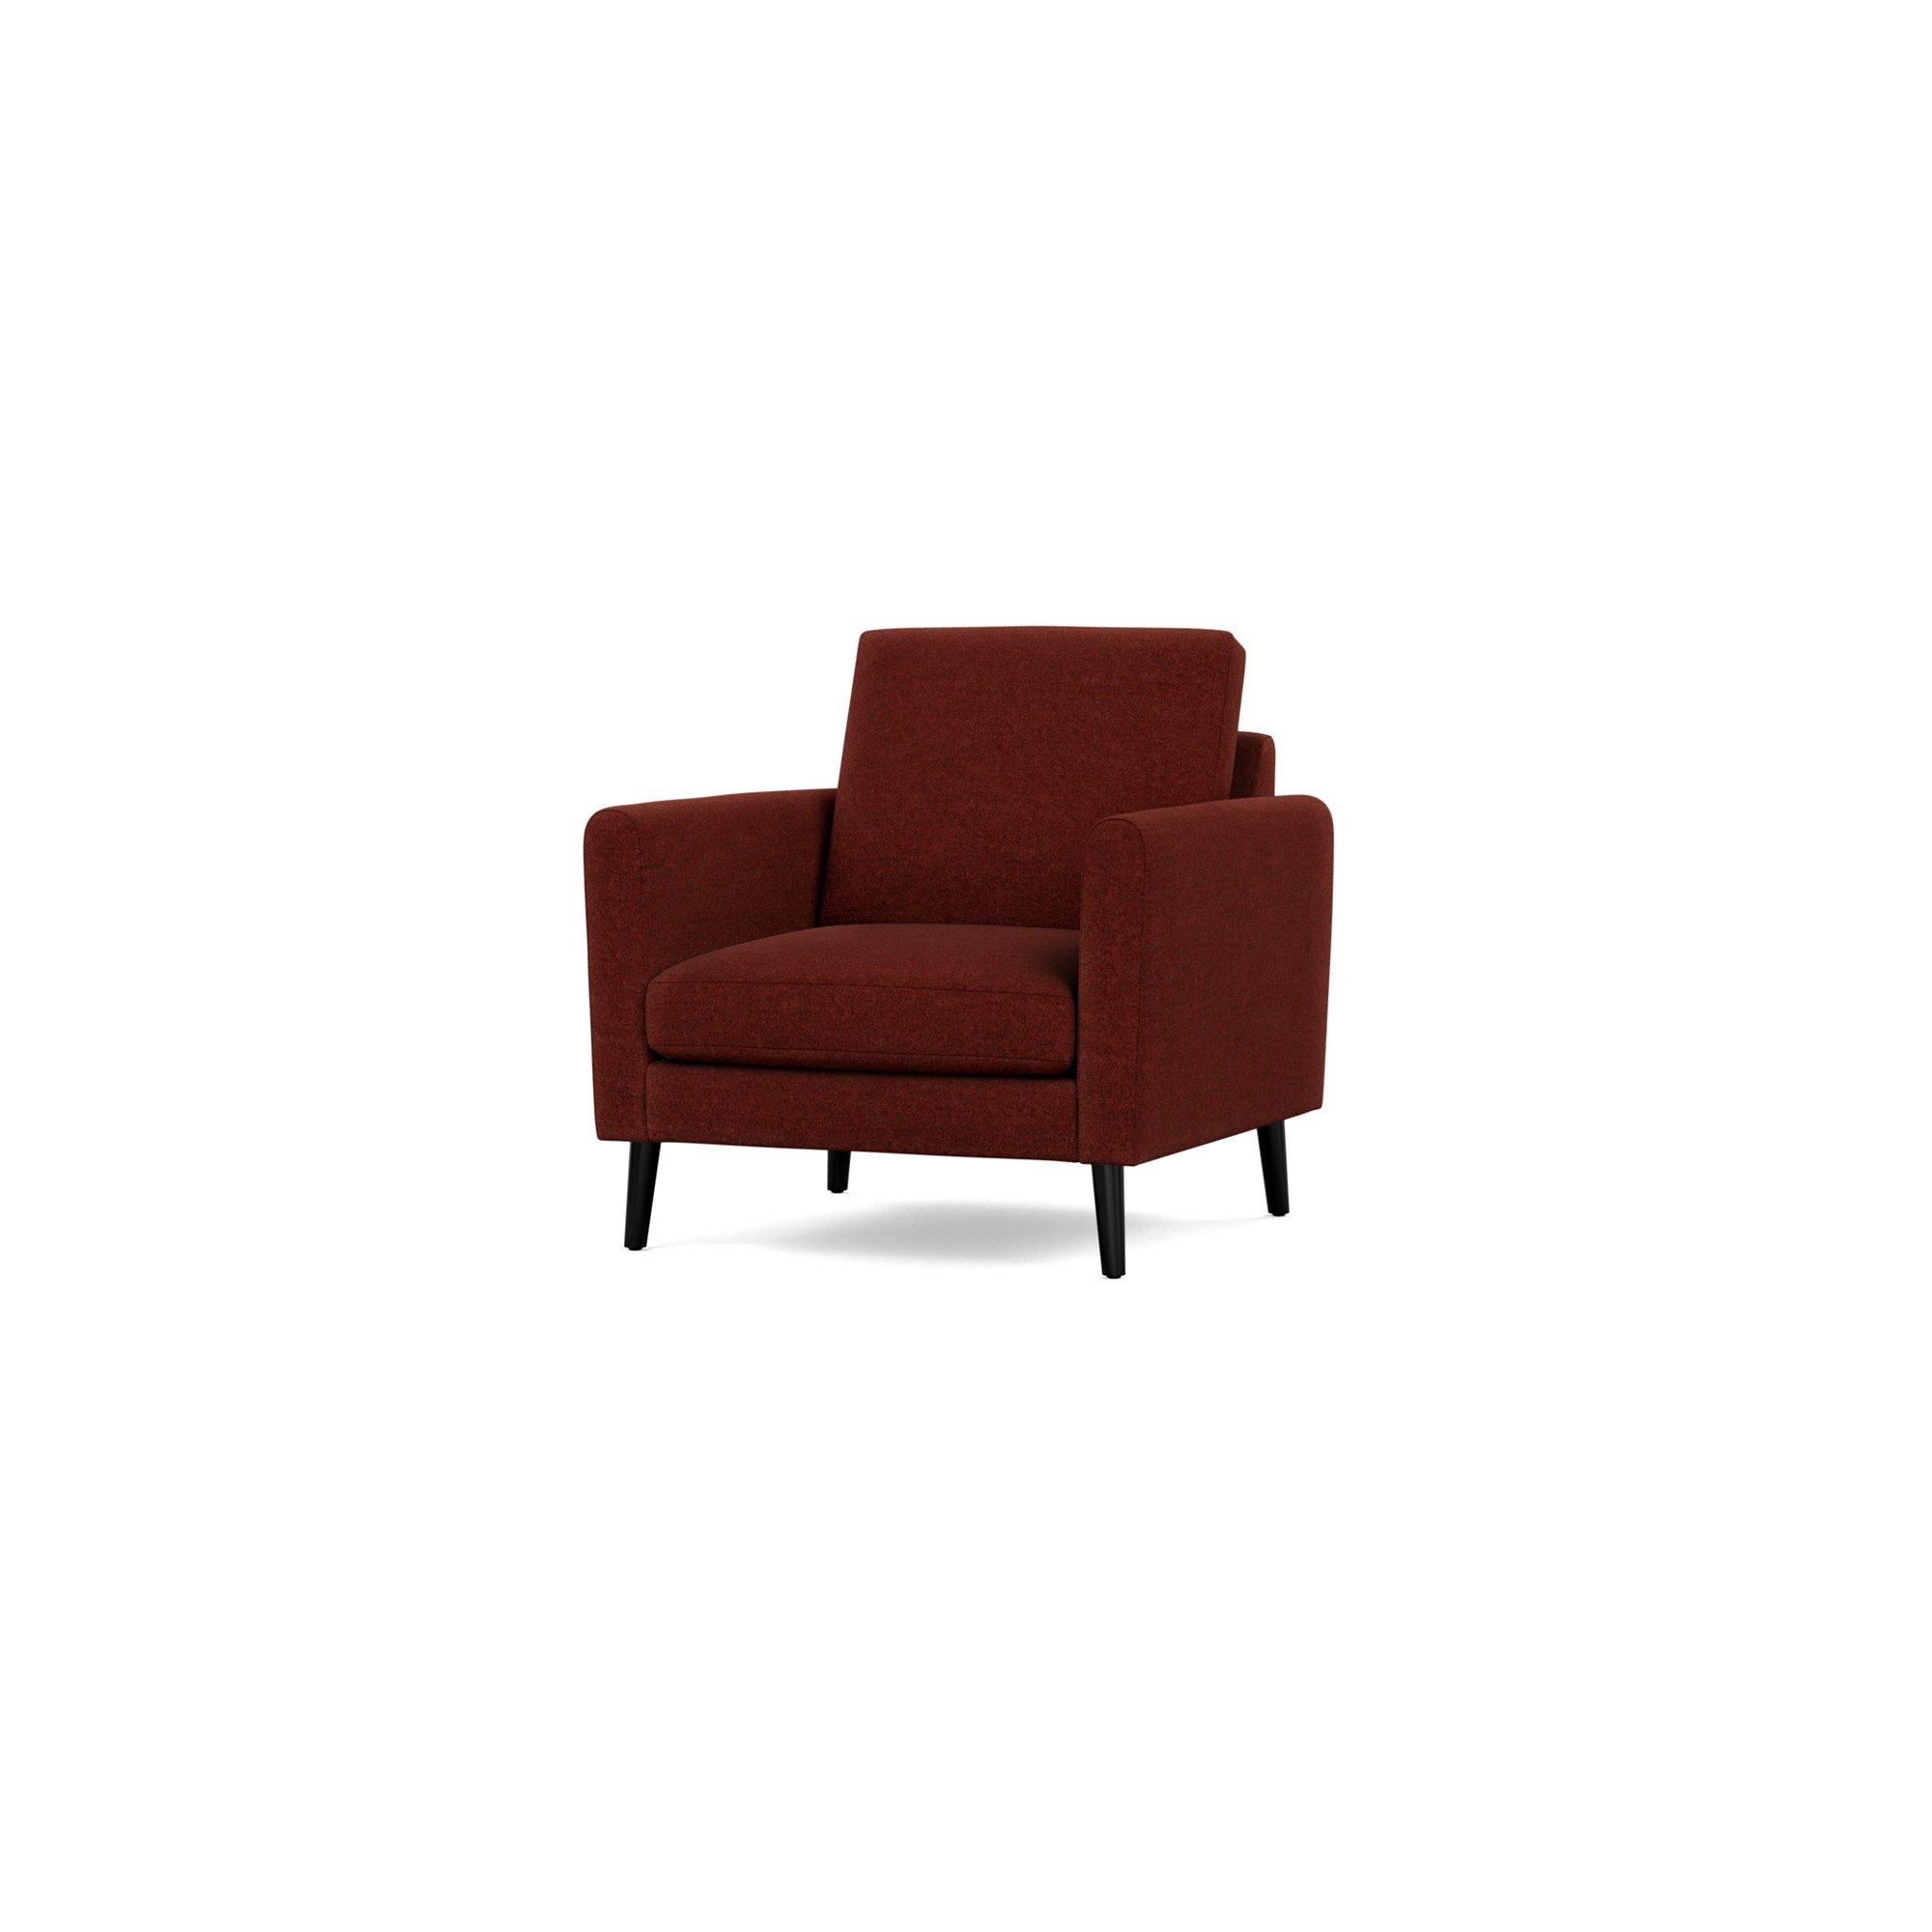 Nomad Armchair in Brick Red, Leg Finish: EbonyLegs - Image 0